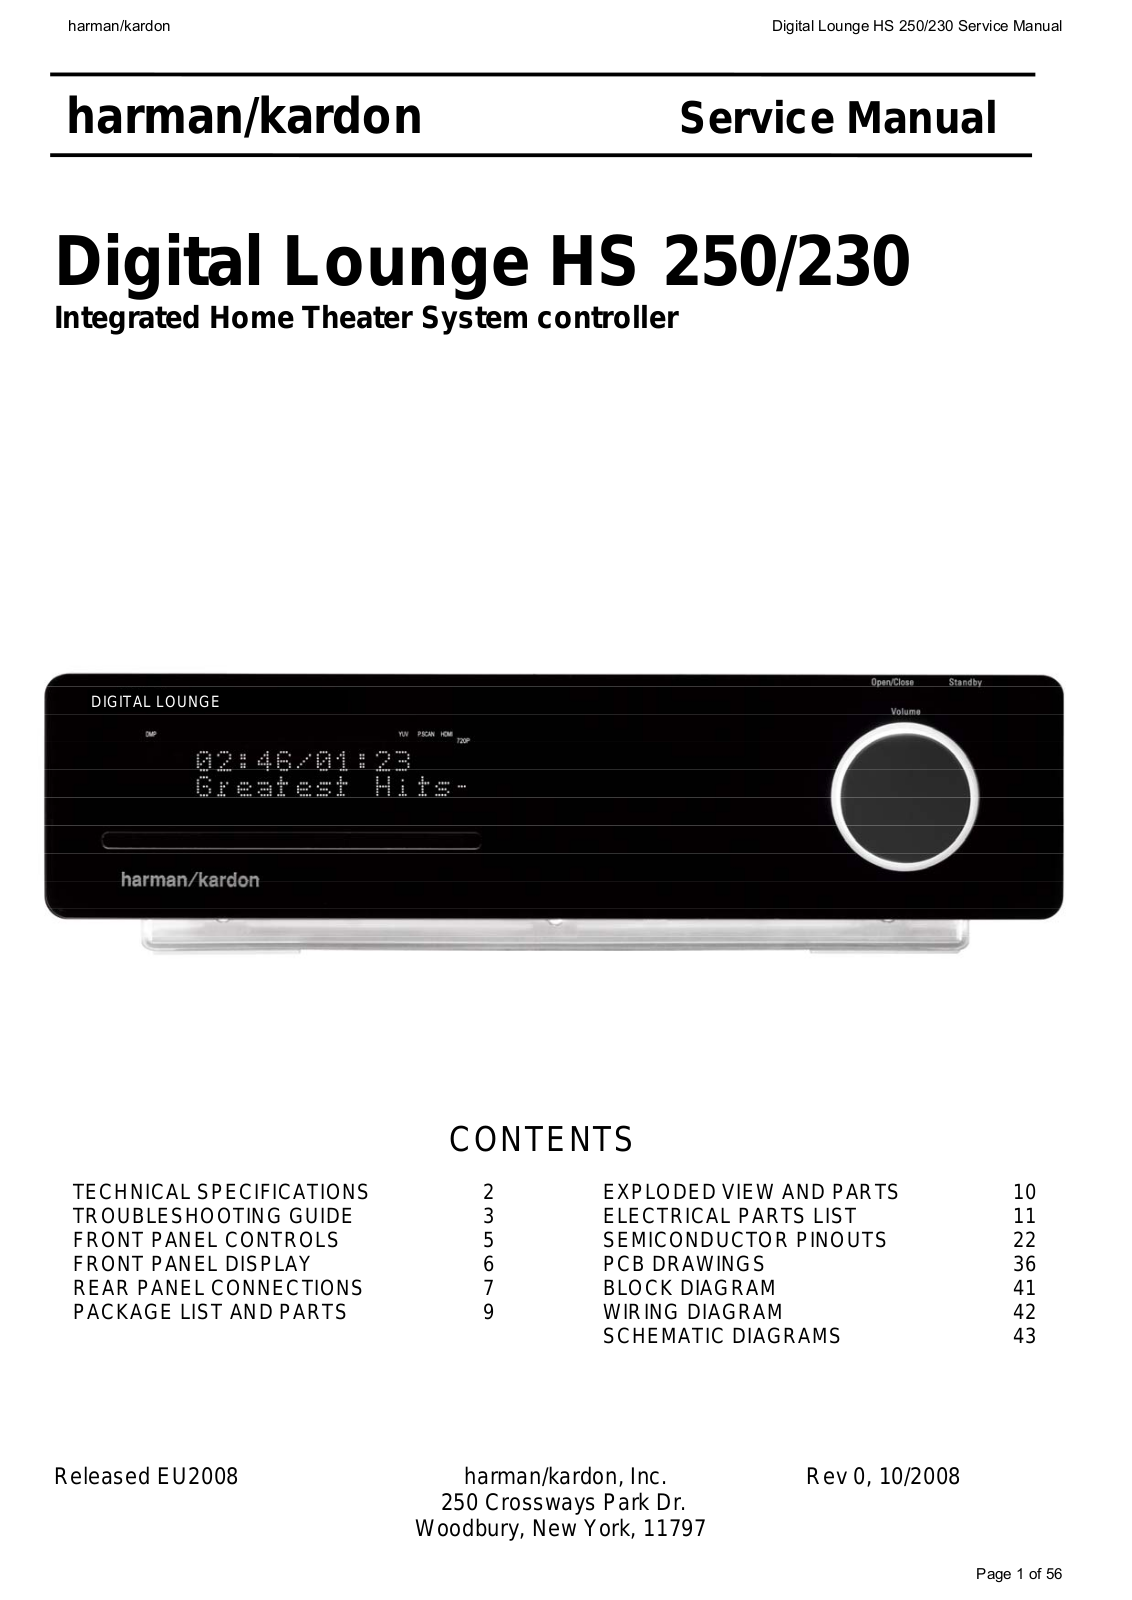 Harman Kardon HS-250-230, Digital-Lounge-HS350, Digital-Lounge-HS250 Service Manual